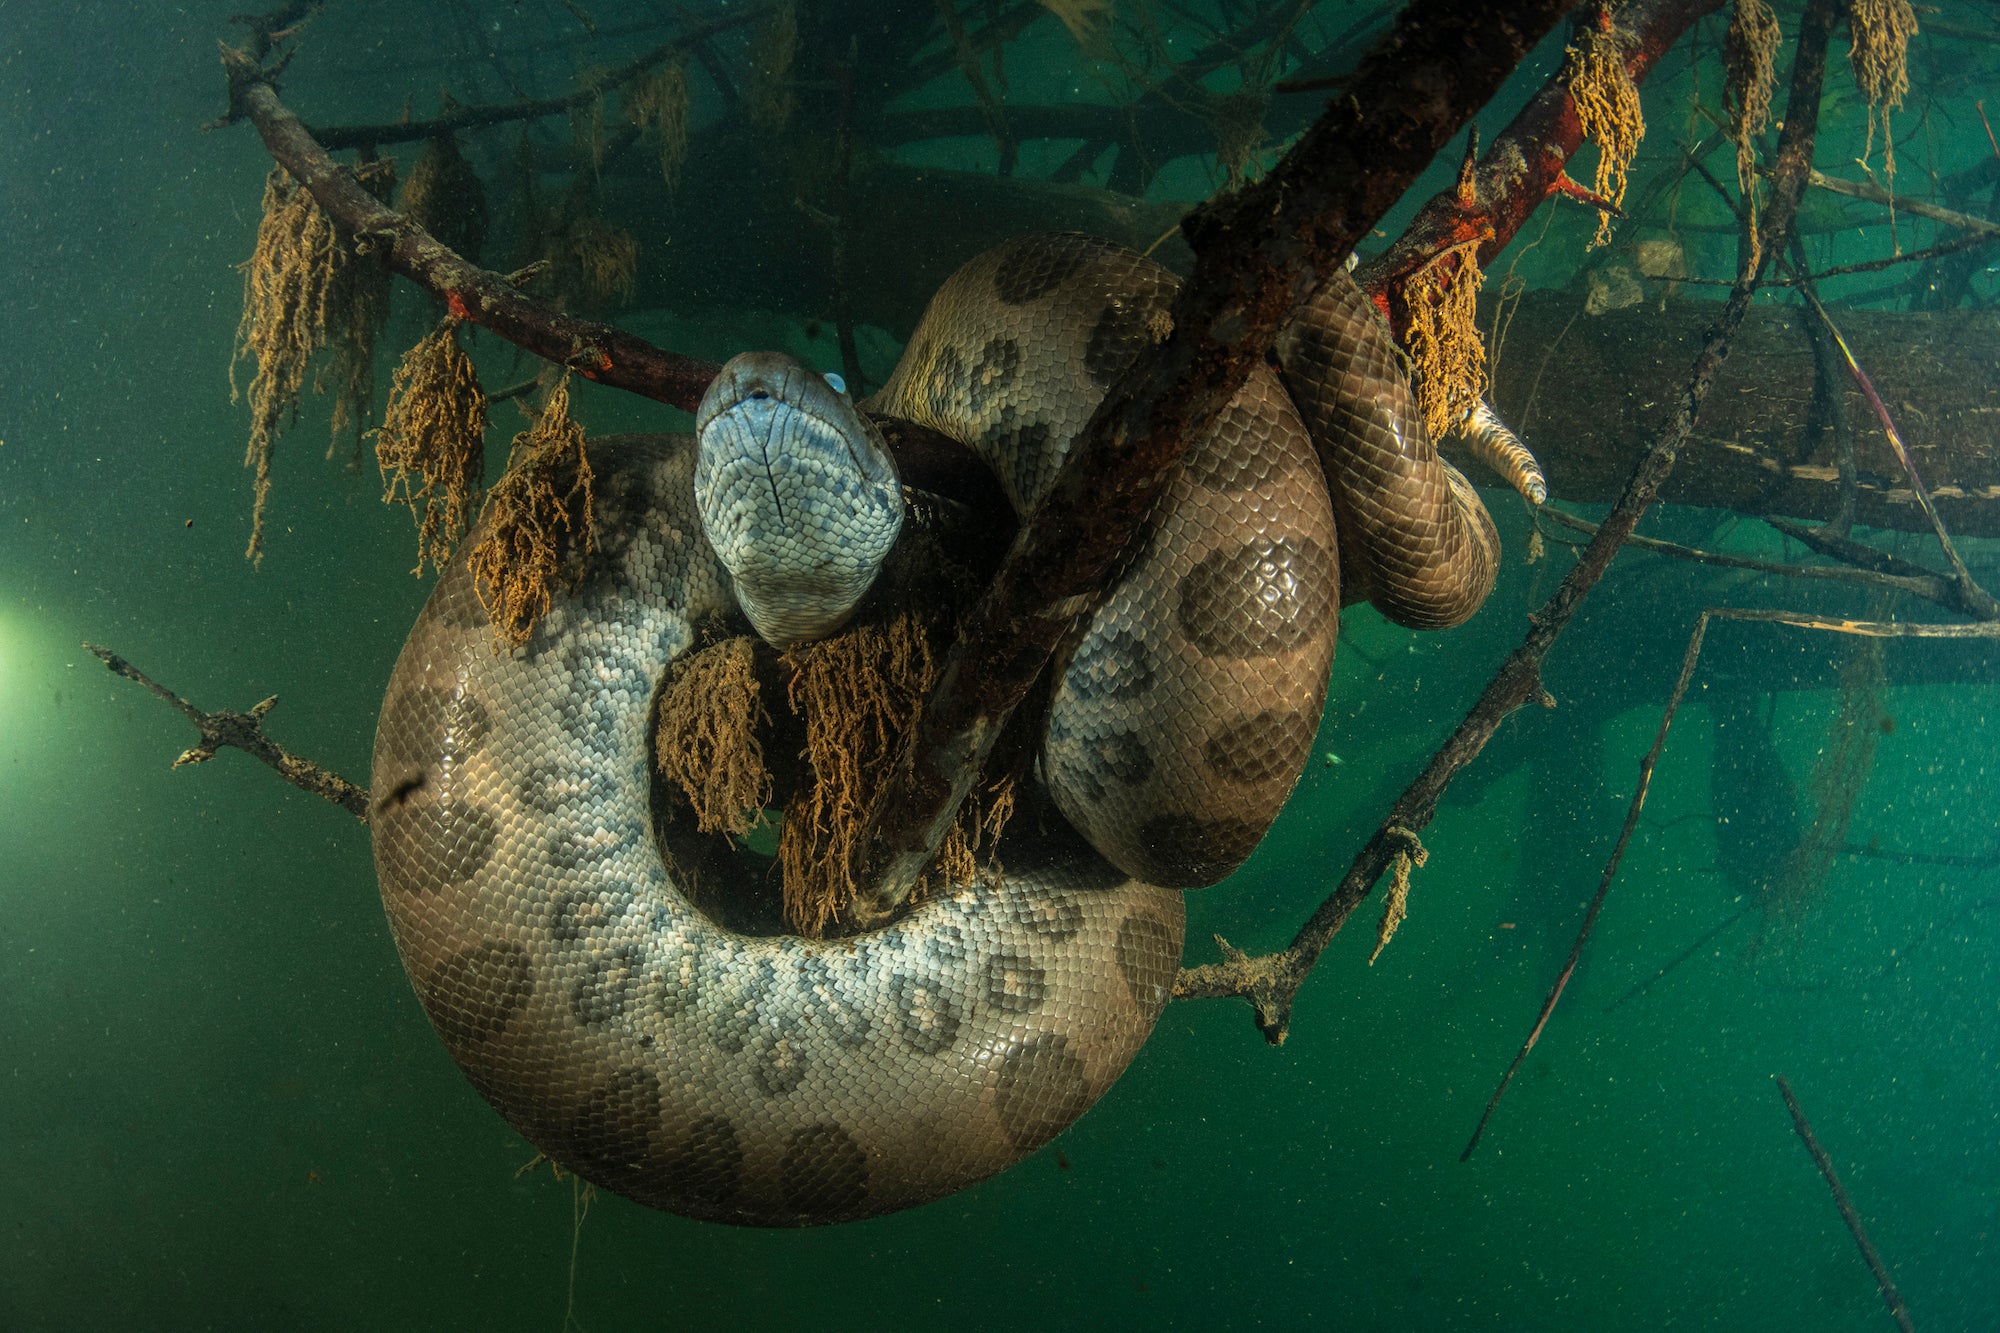 A green anaconda wraps around an underwater tree branch in Brazil's Rio Formoso.